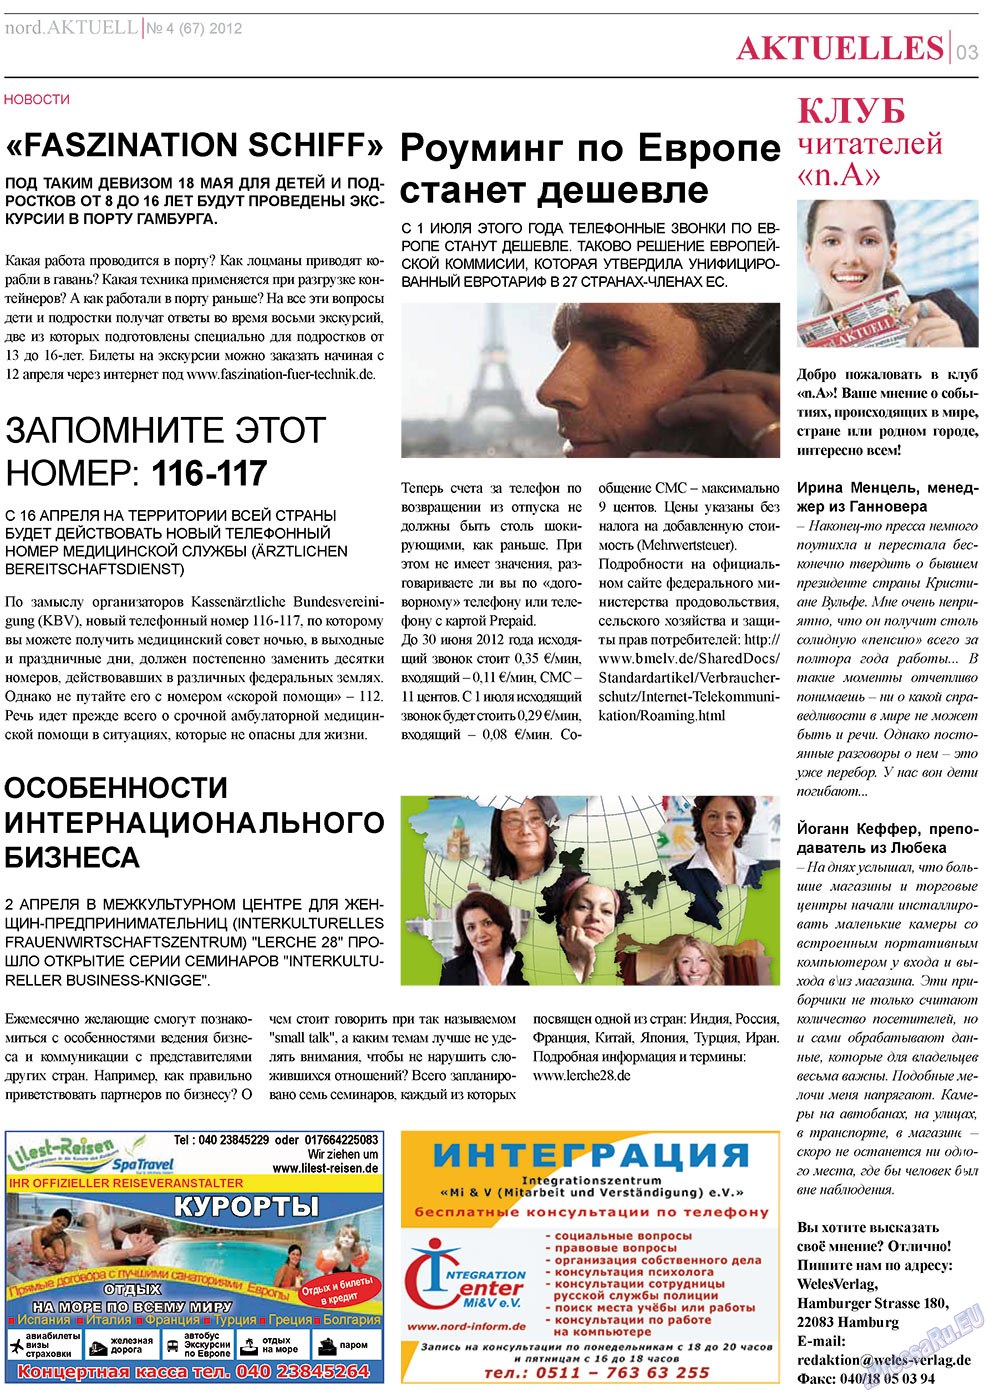 nord.Aktuell, газета. 2012 №4 стр.3